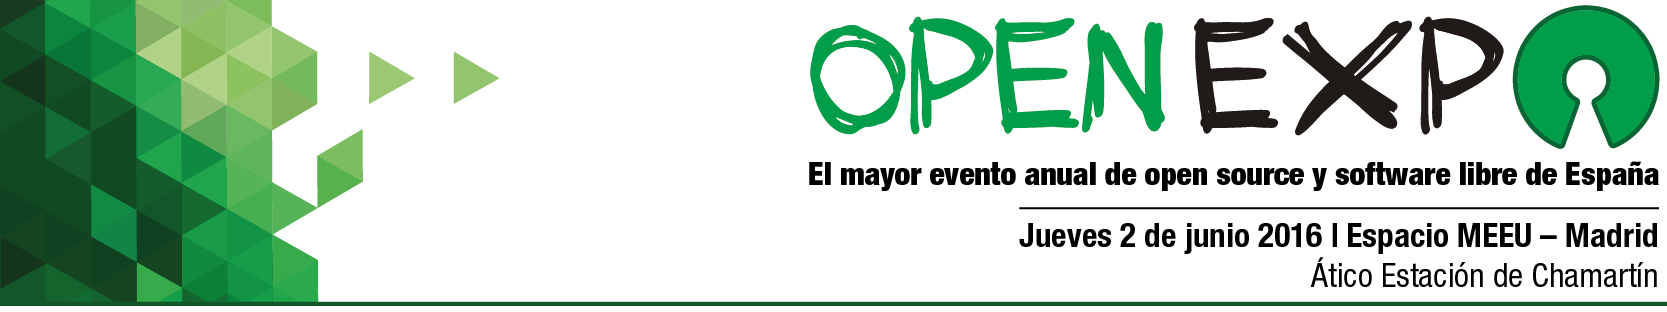 Banner promocional OpenExpo 2016